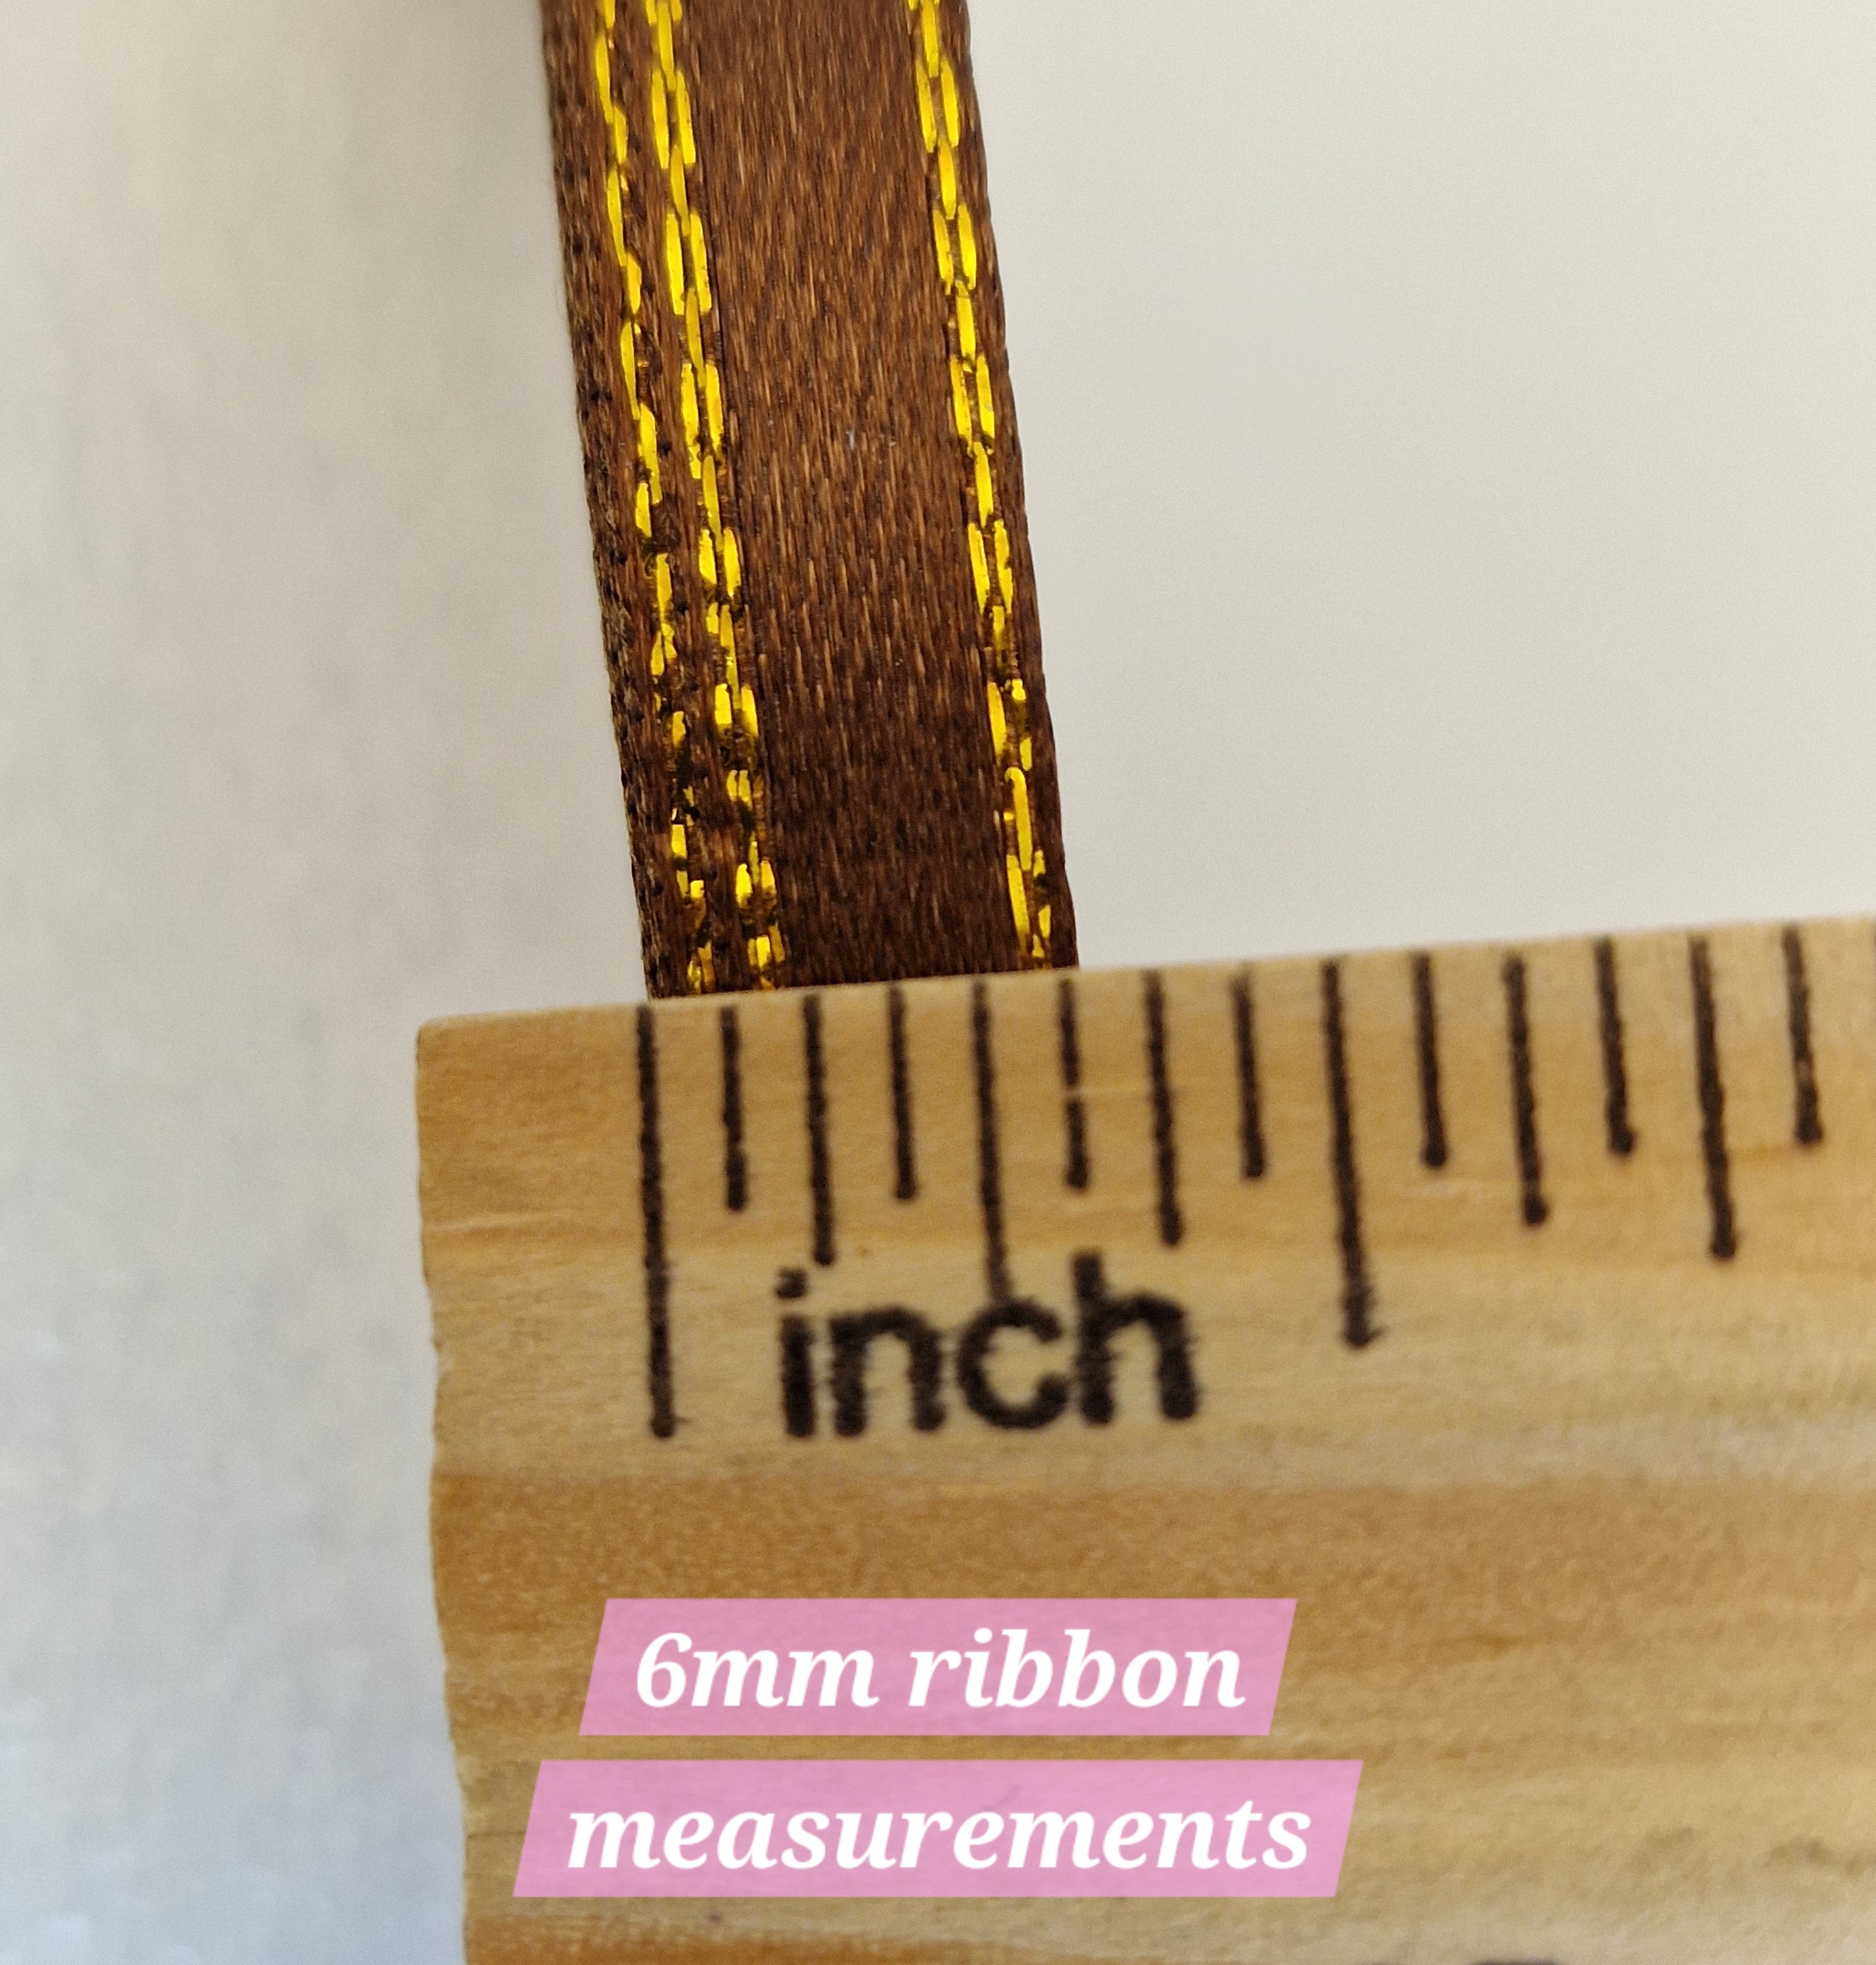 MajorCrafts 6mm 22metres Light Pink with Gold Edge Trim Satin Fabric Ribbon Roll